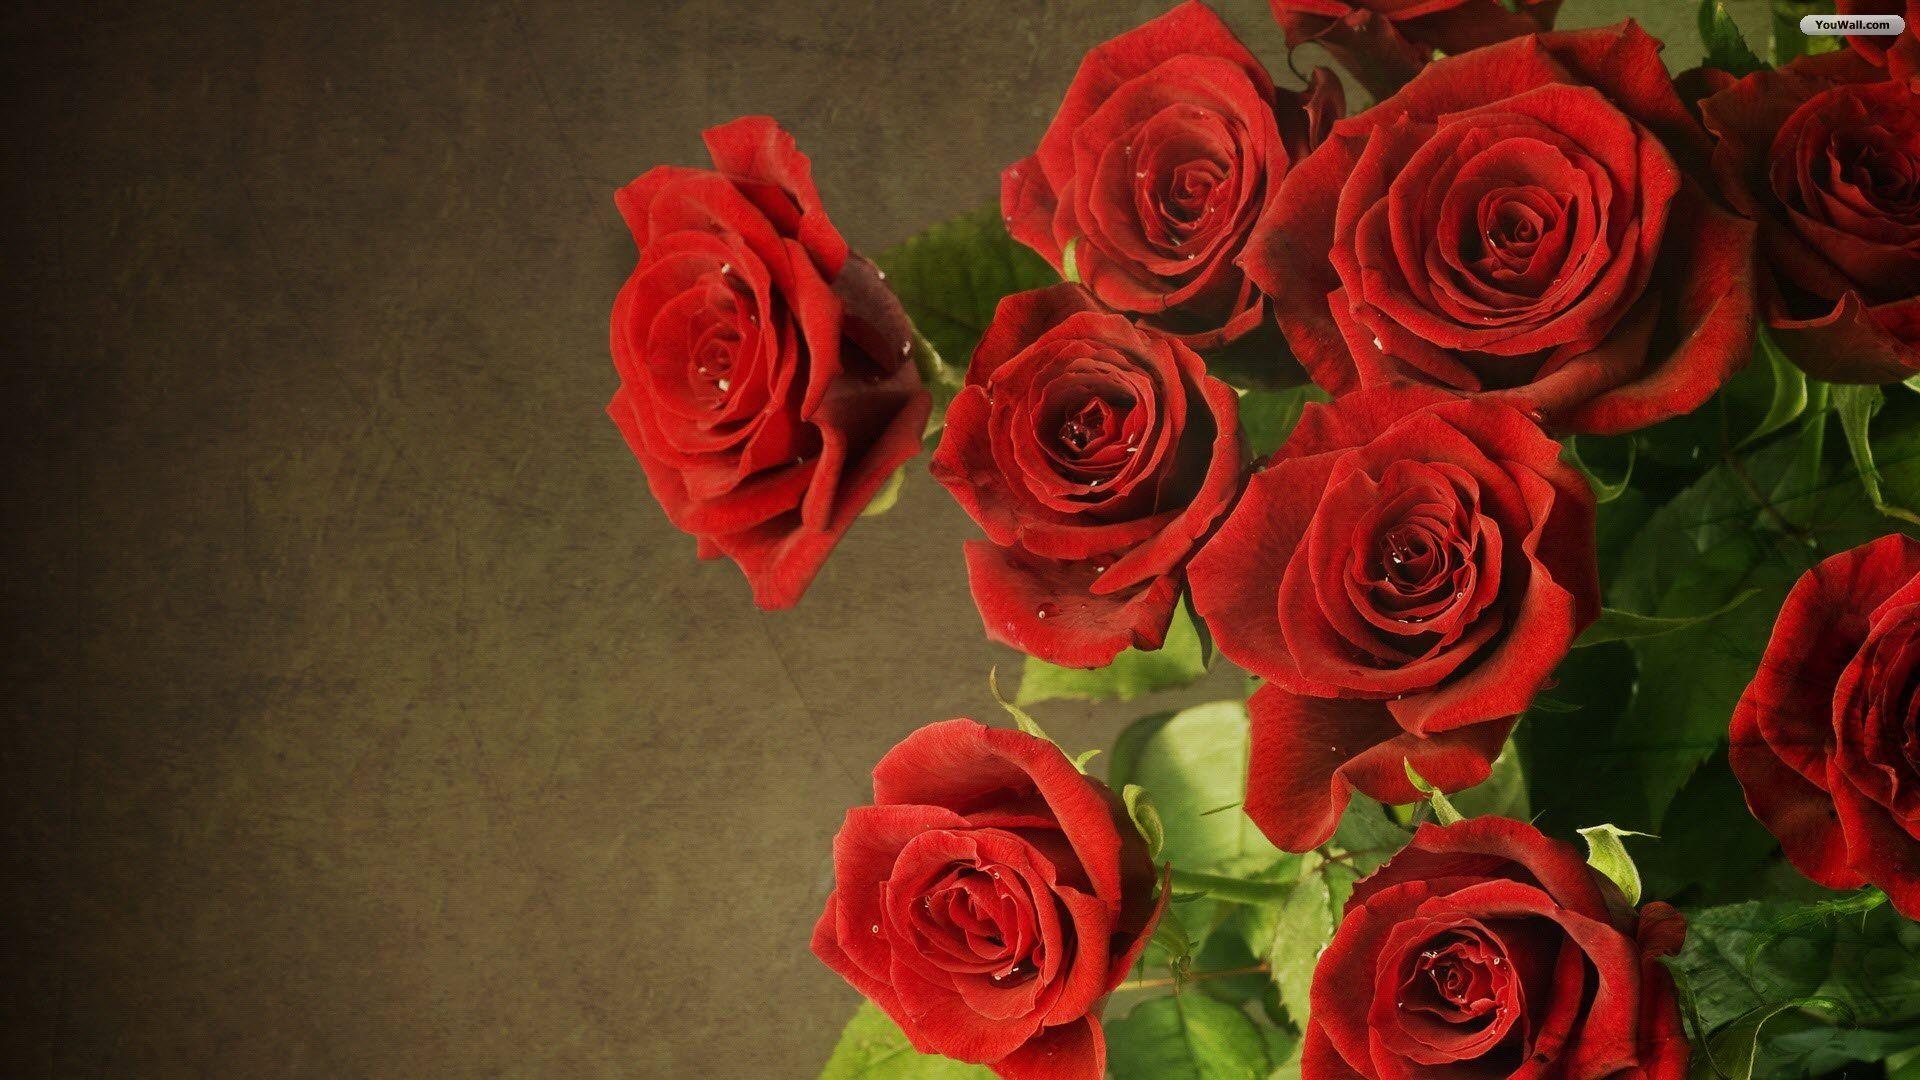 Red Rose Wallpaper Free Download. Stock Flower Image